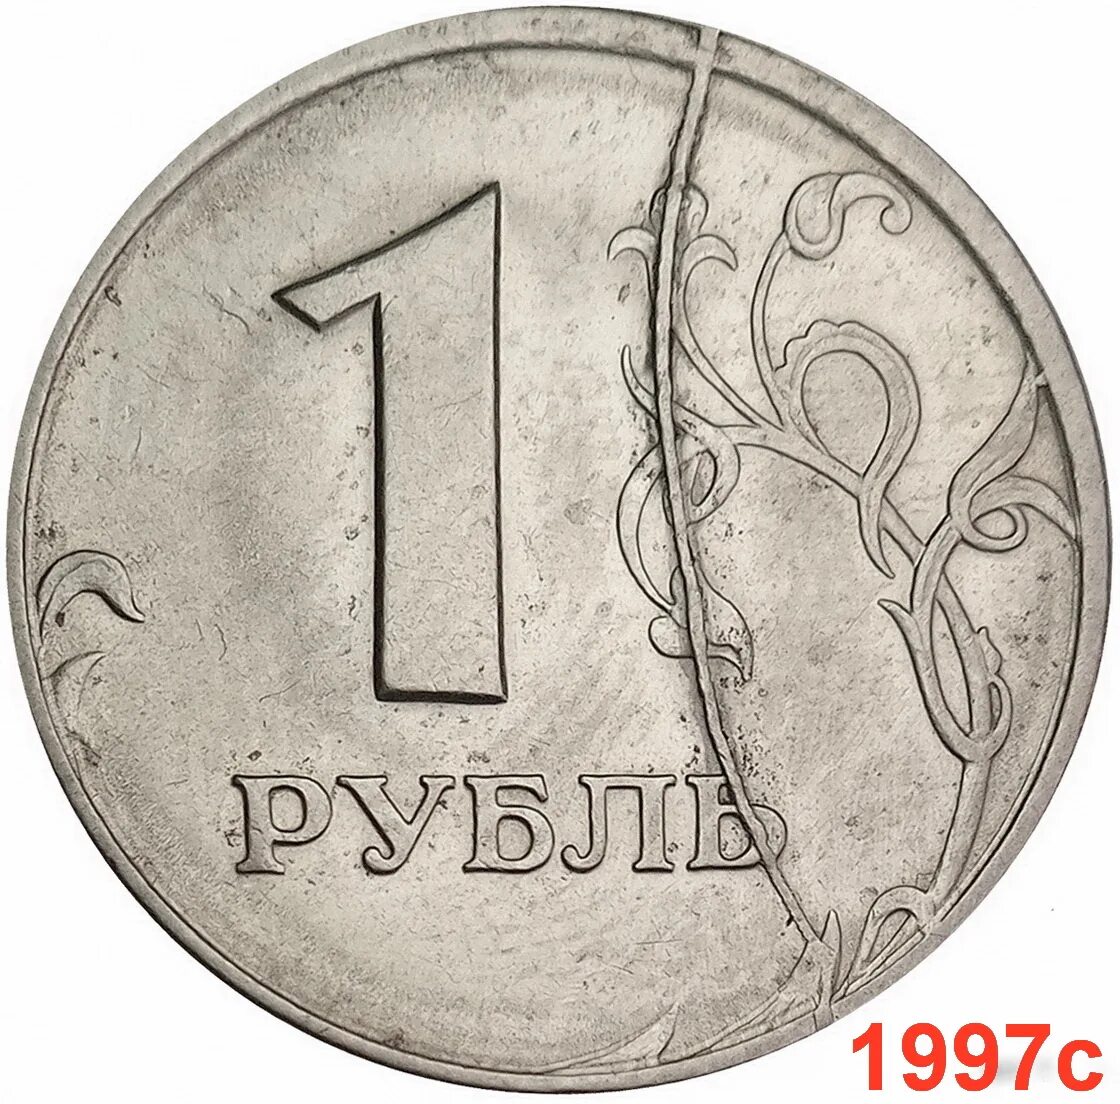 Рубль 1997 раскол. 1 Рубль 1997 полный раскол. Рубль раскол штемпеля. 1 Рубль 1997.